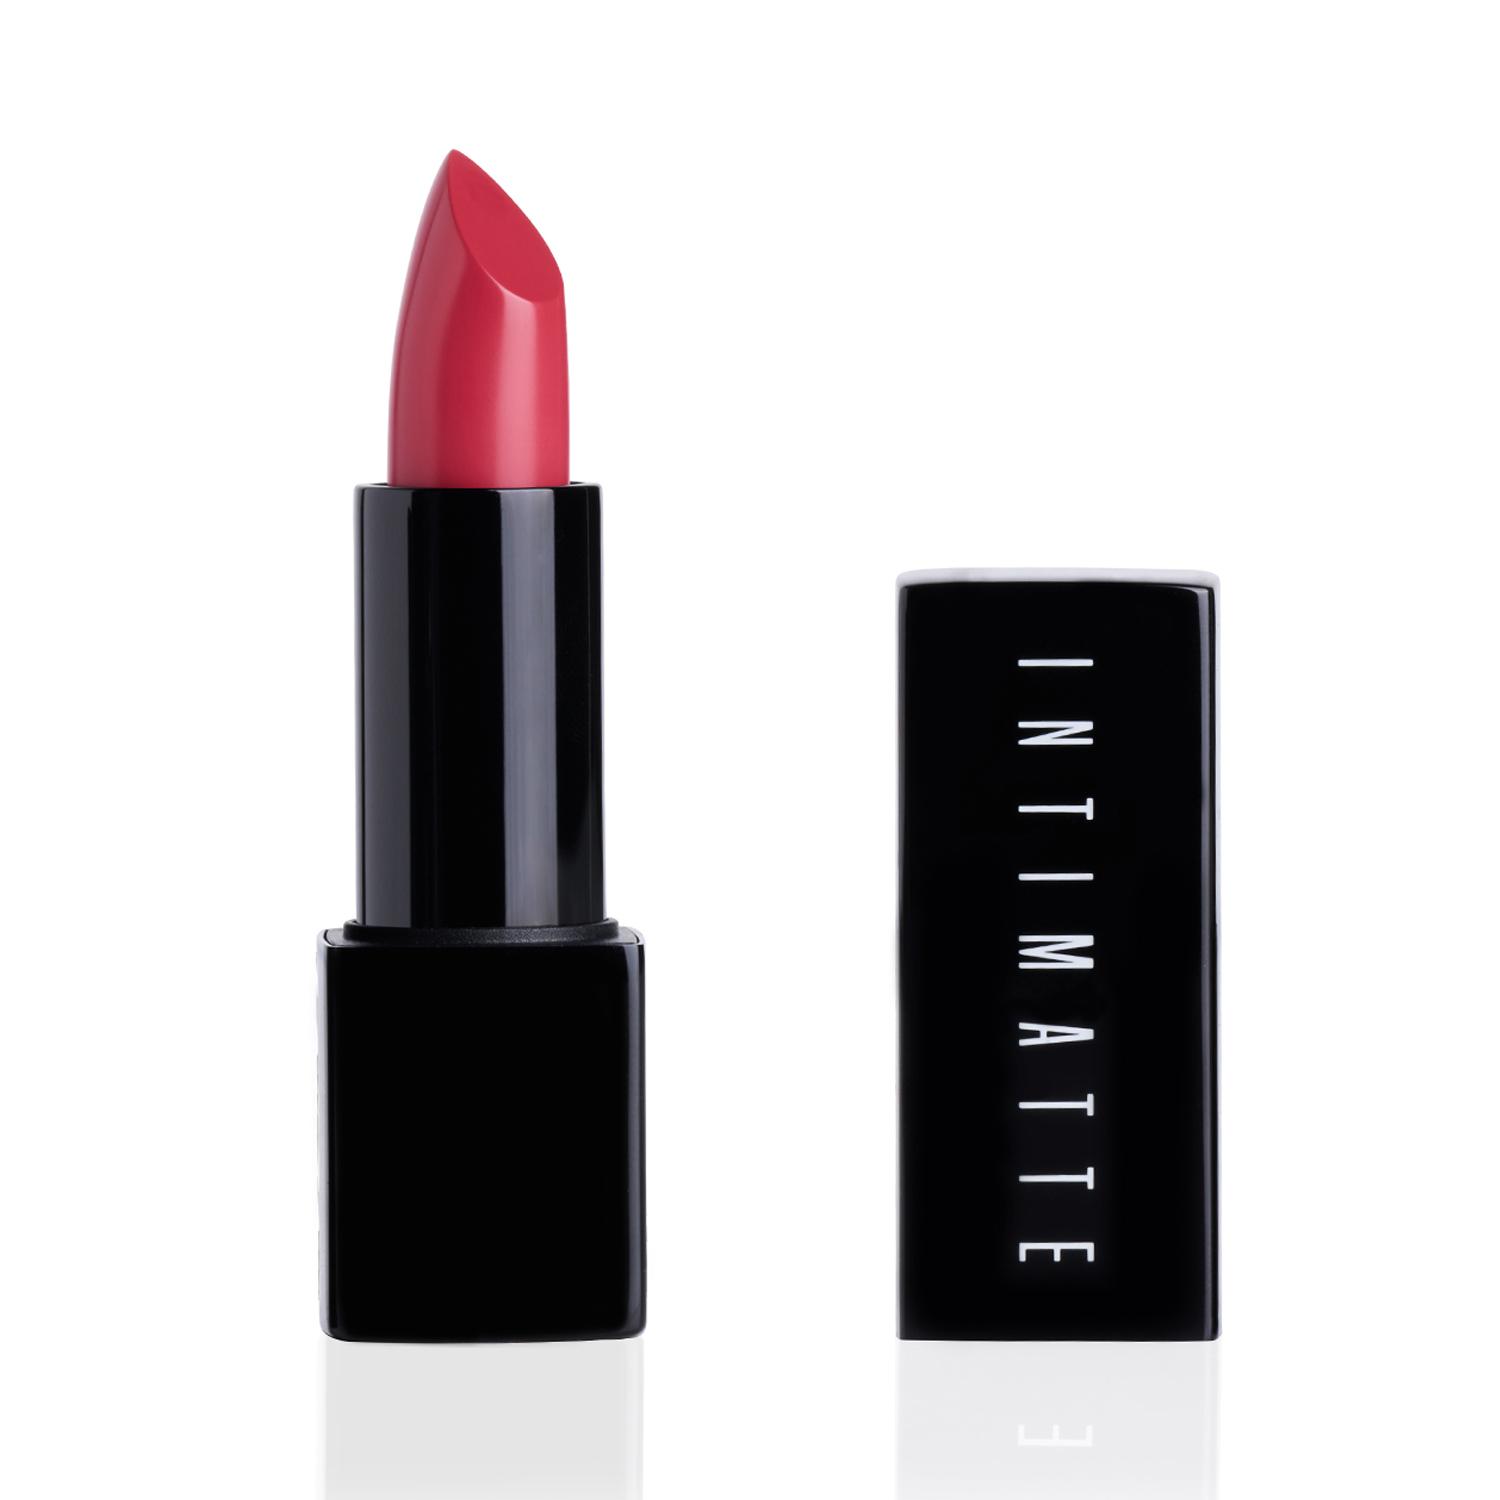 PAC | PAC Intimatte Lipstick - Pinky Promise (4g)